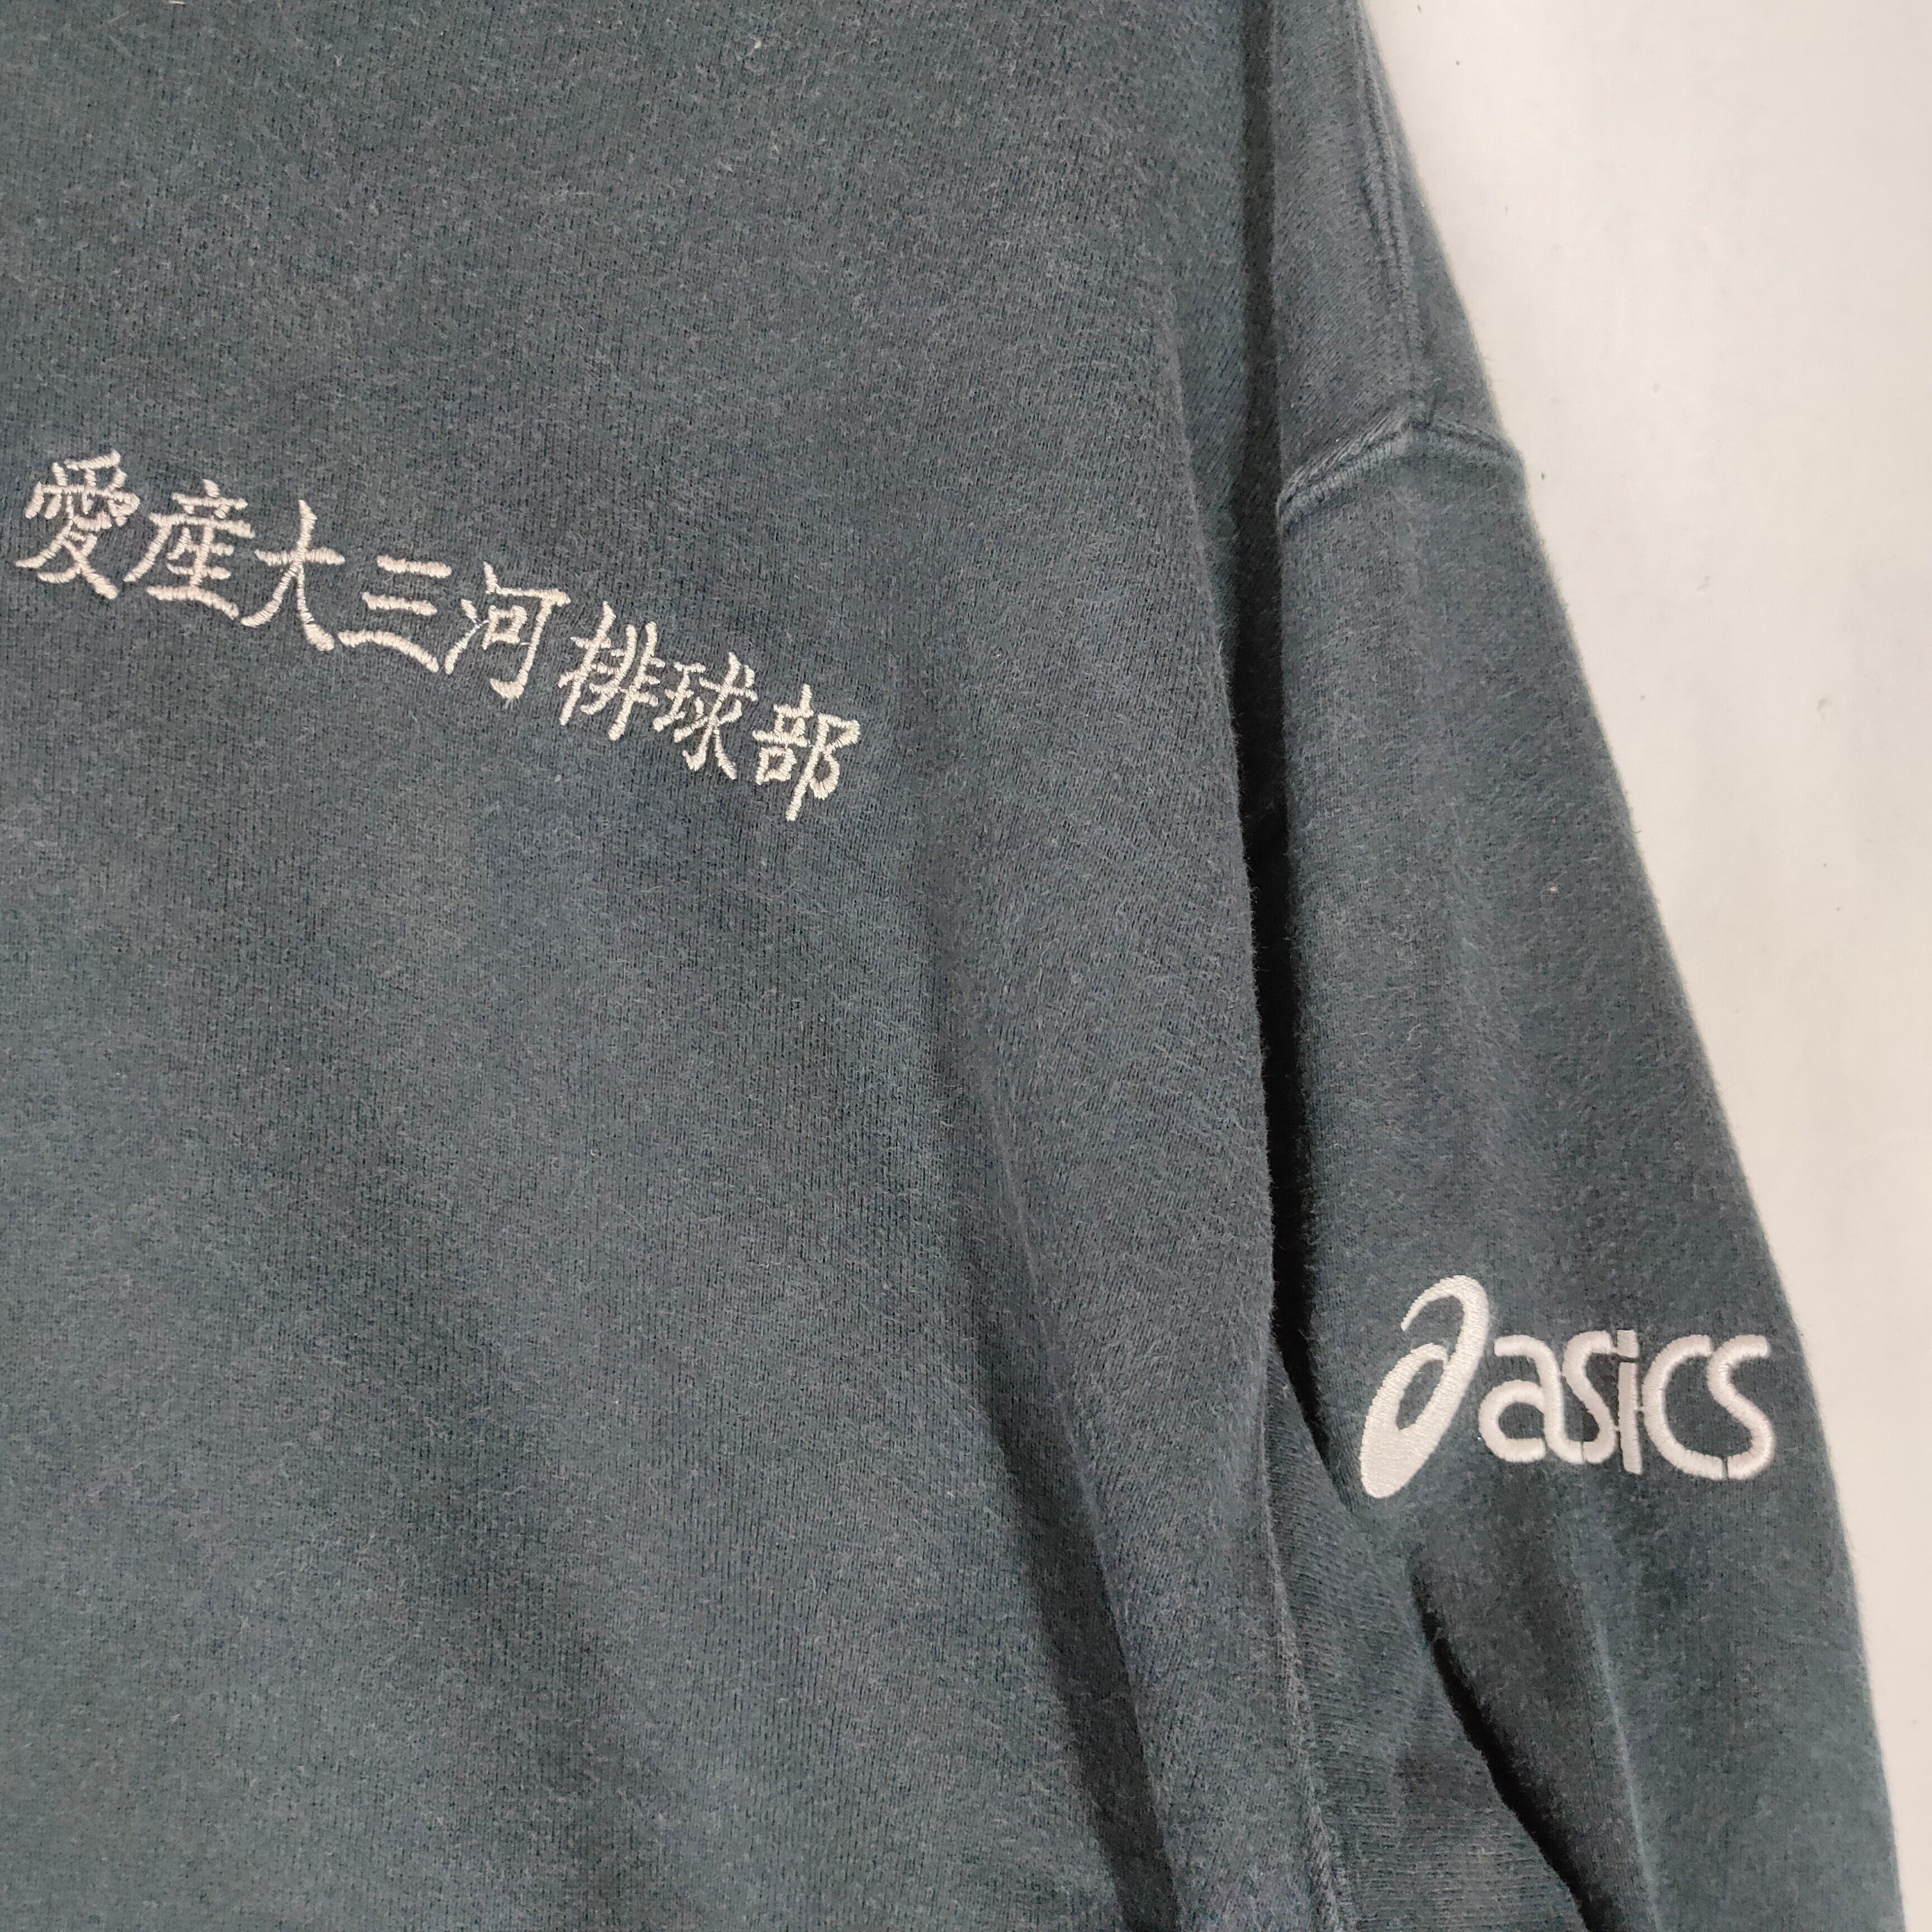 ASICS JAPAN Embroidery logo L Size Crewneck Sweatshirt - 2